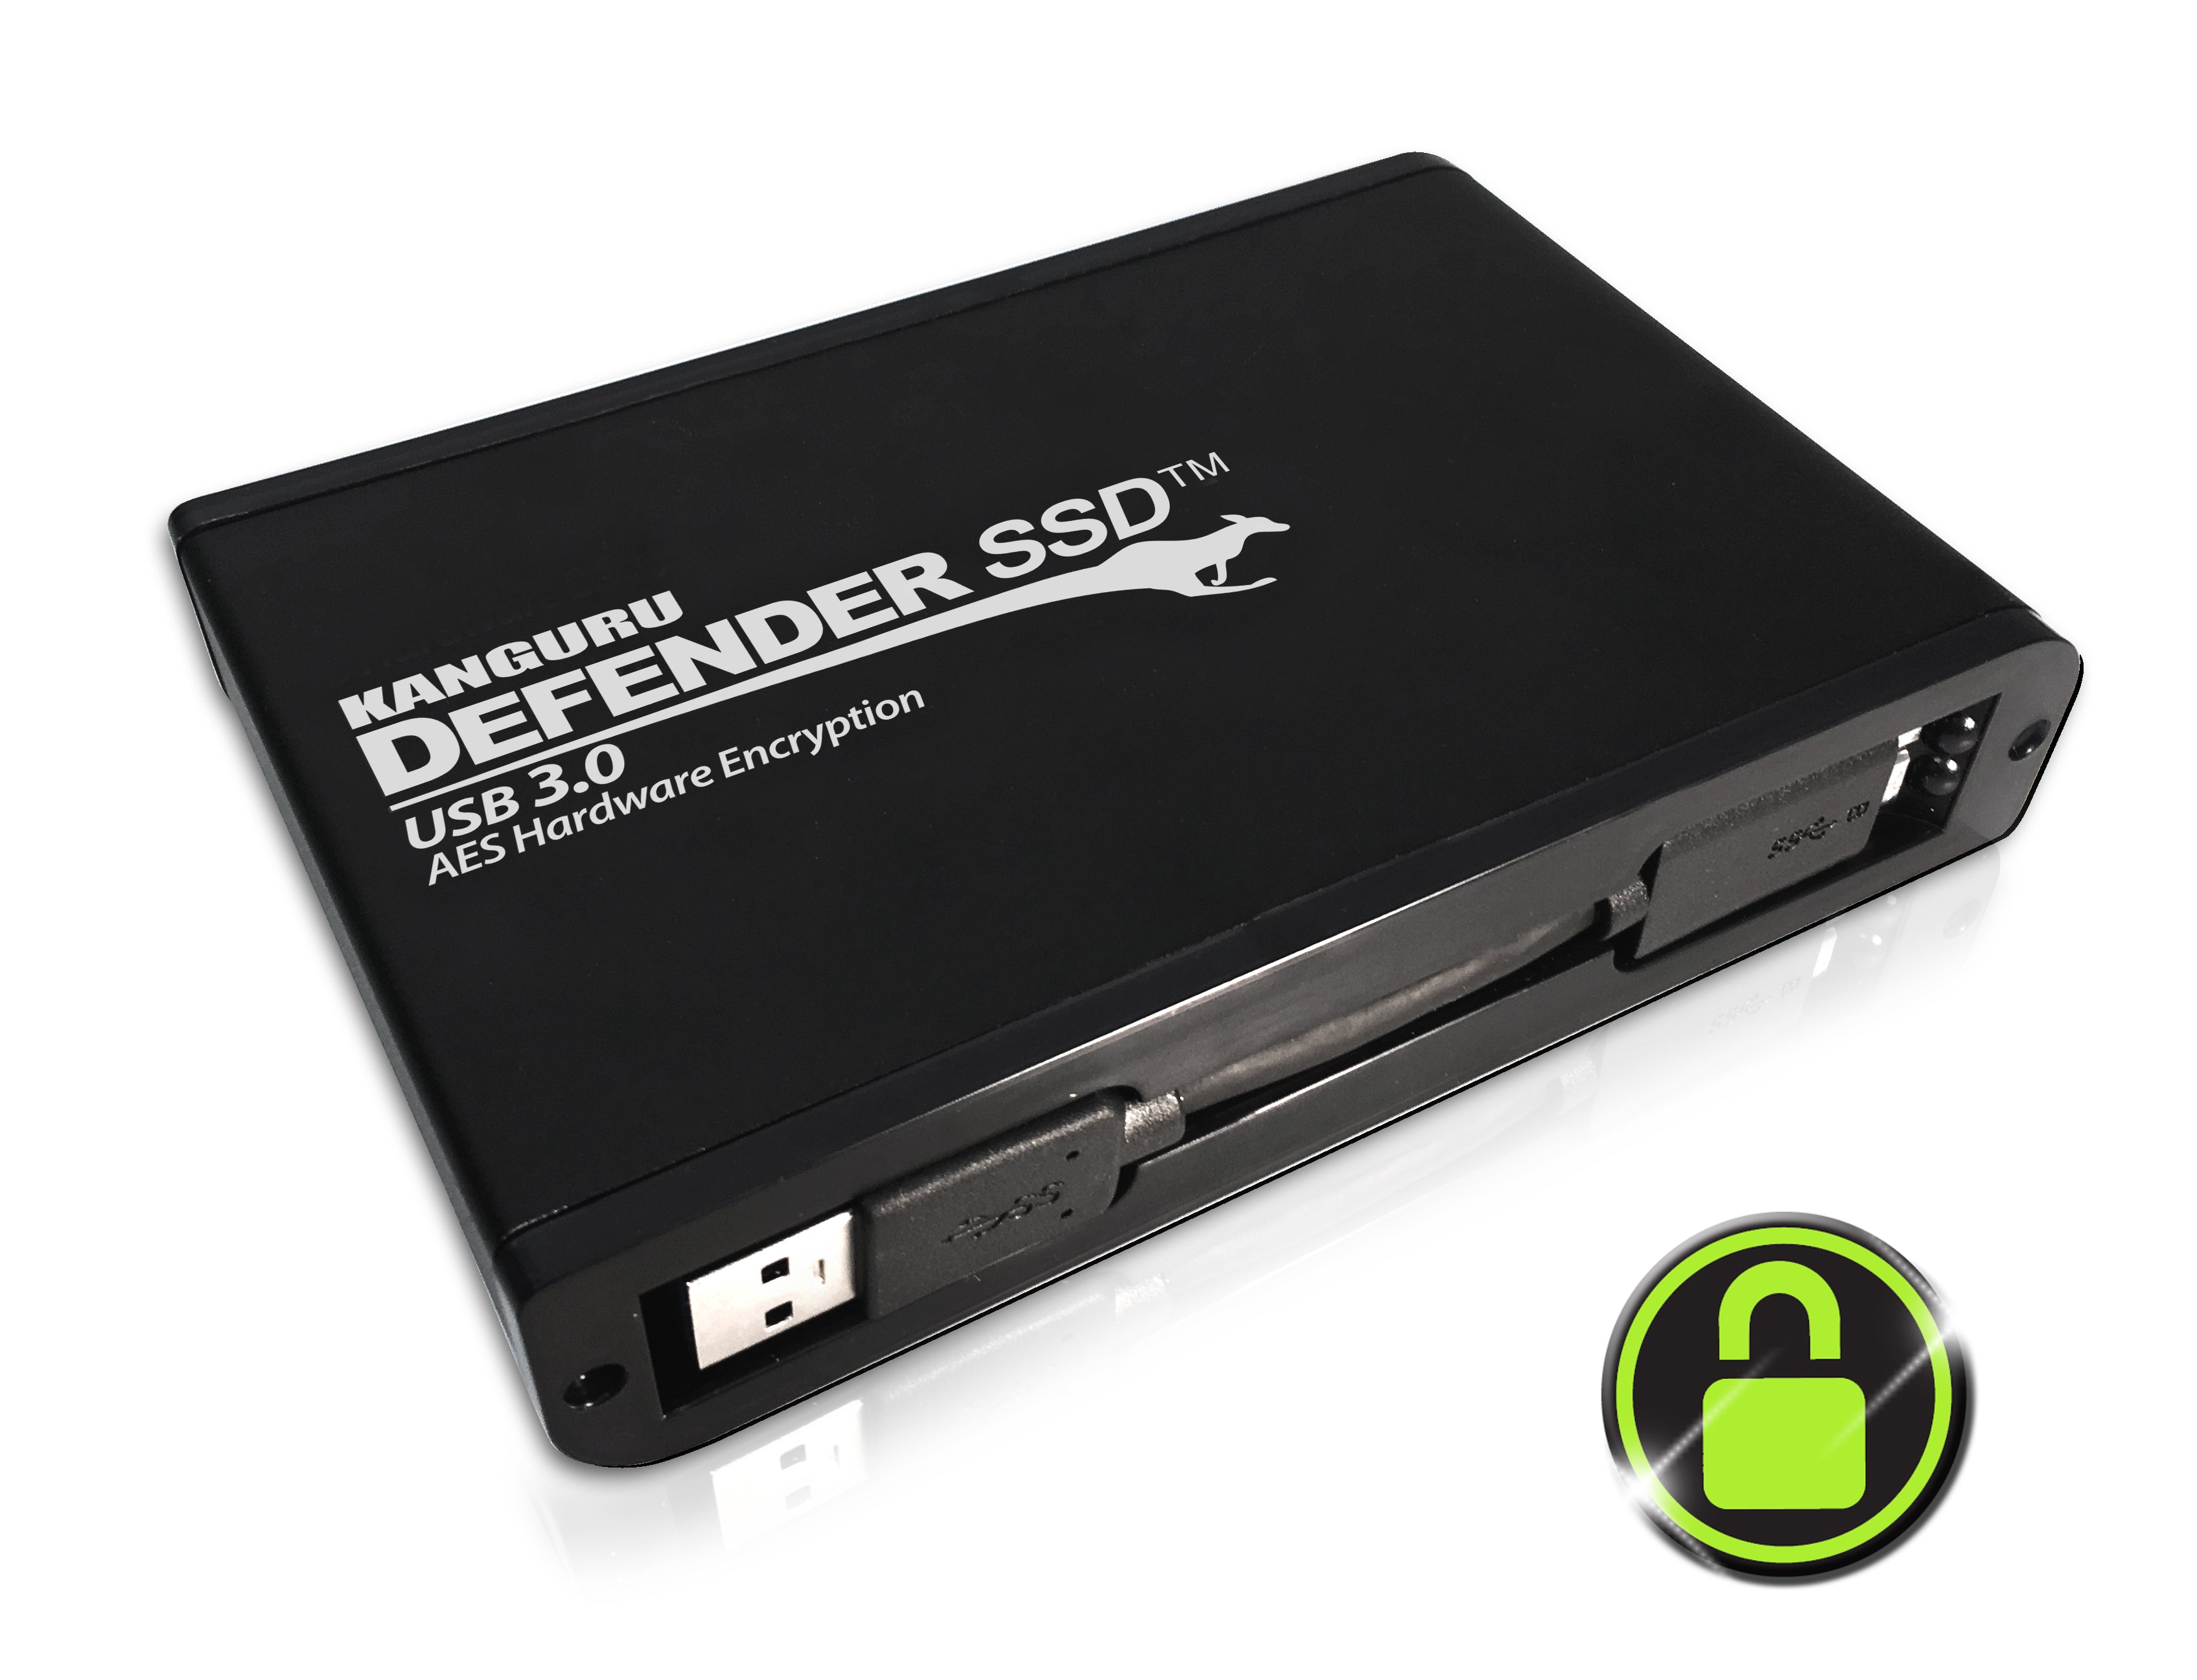 Kanguru Defender SSD 35 AES 256-Bit hardware encrypted solid state drive